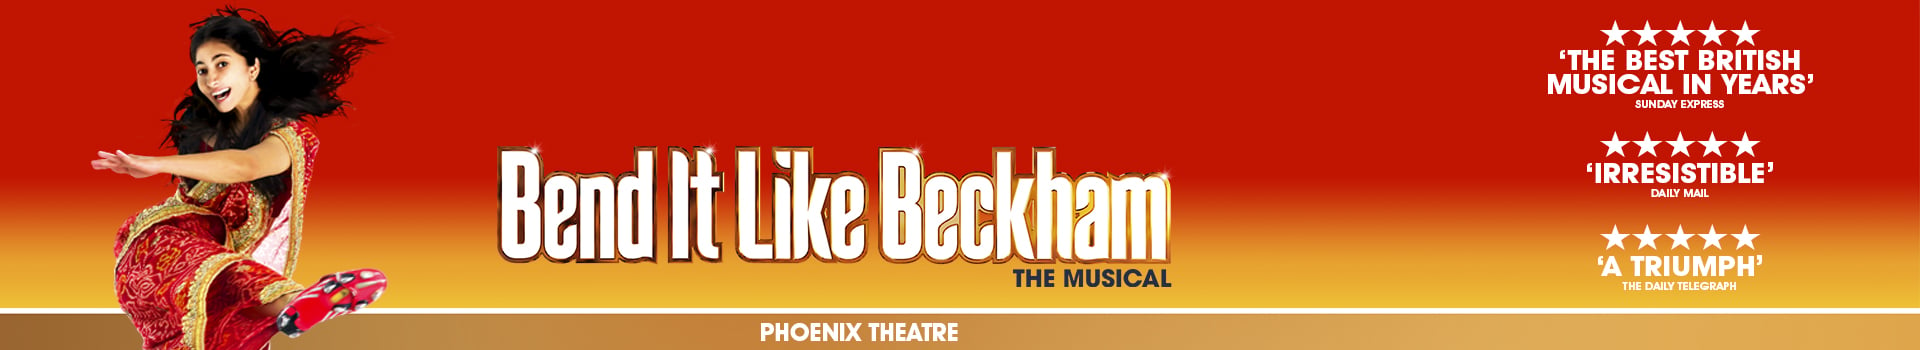 Bend It Like Beckham tickets London Phoenix Theatre